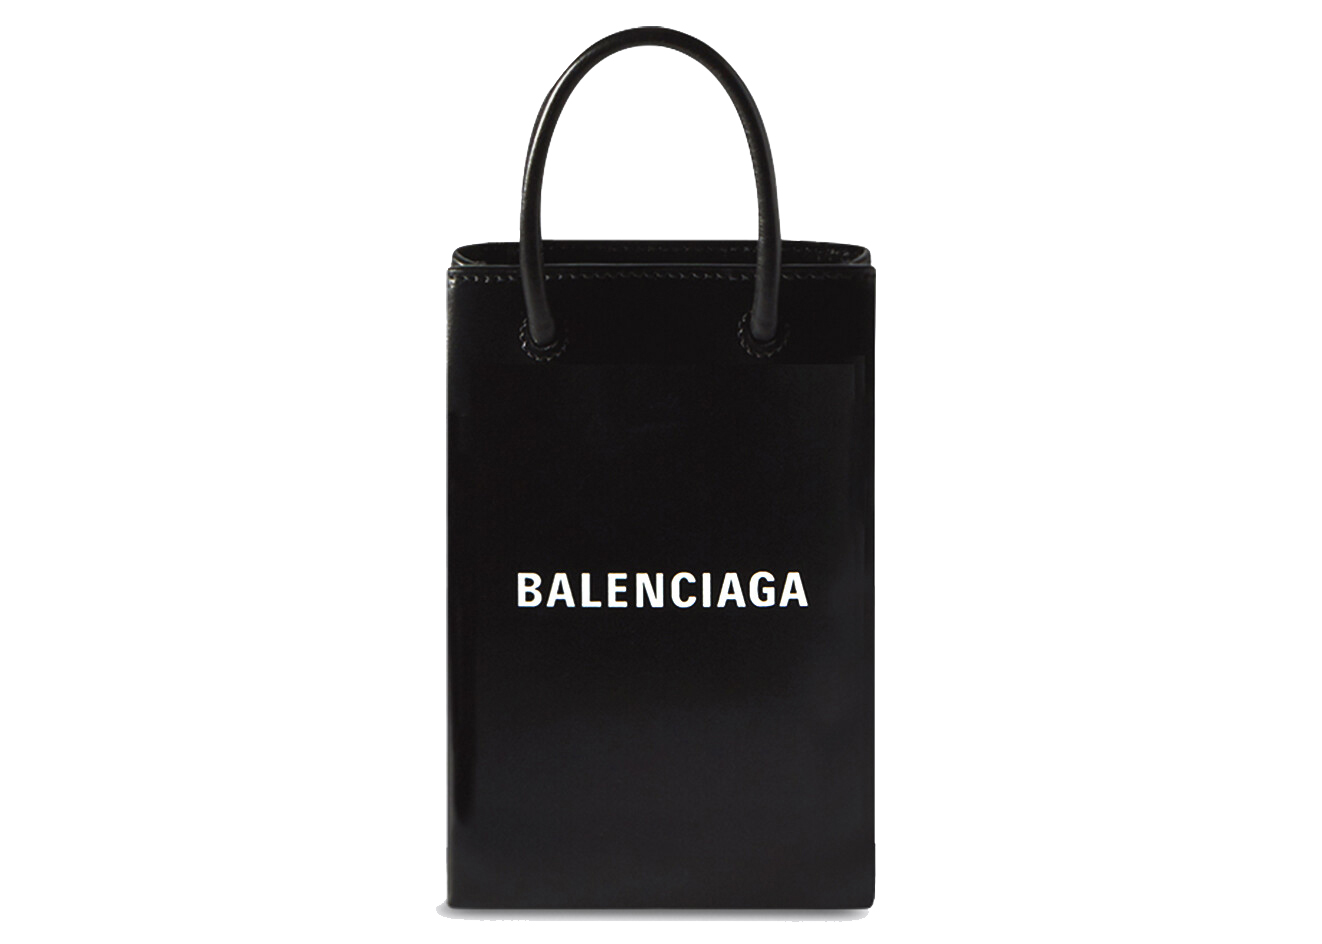 Balenciaga x The Simpsons Mini Shopping Bag Black